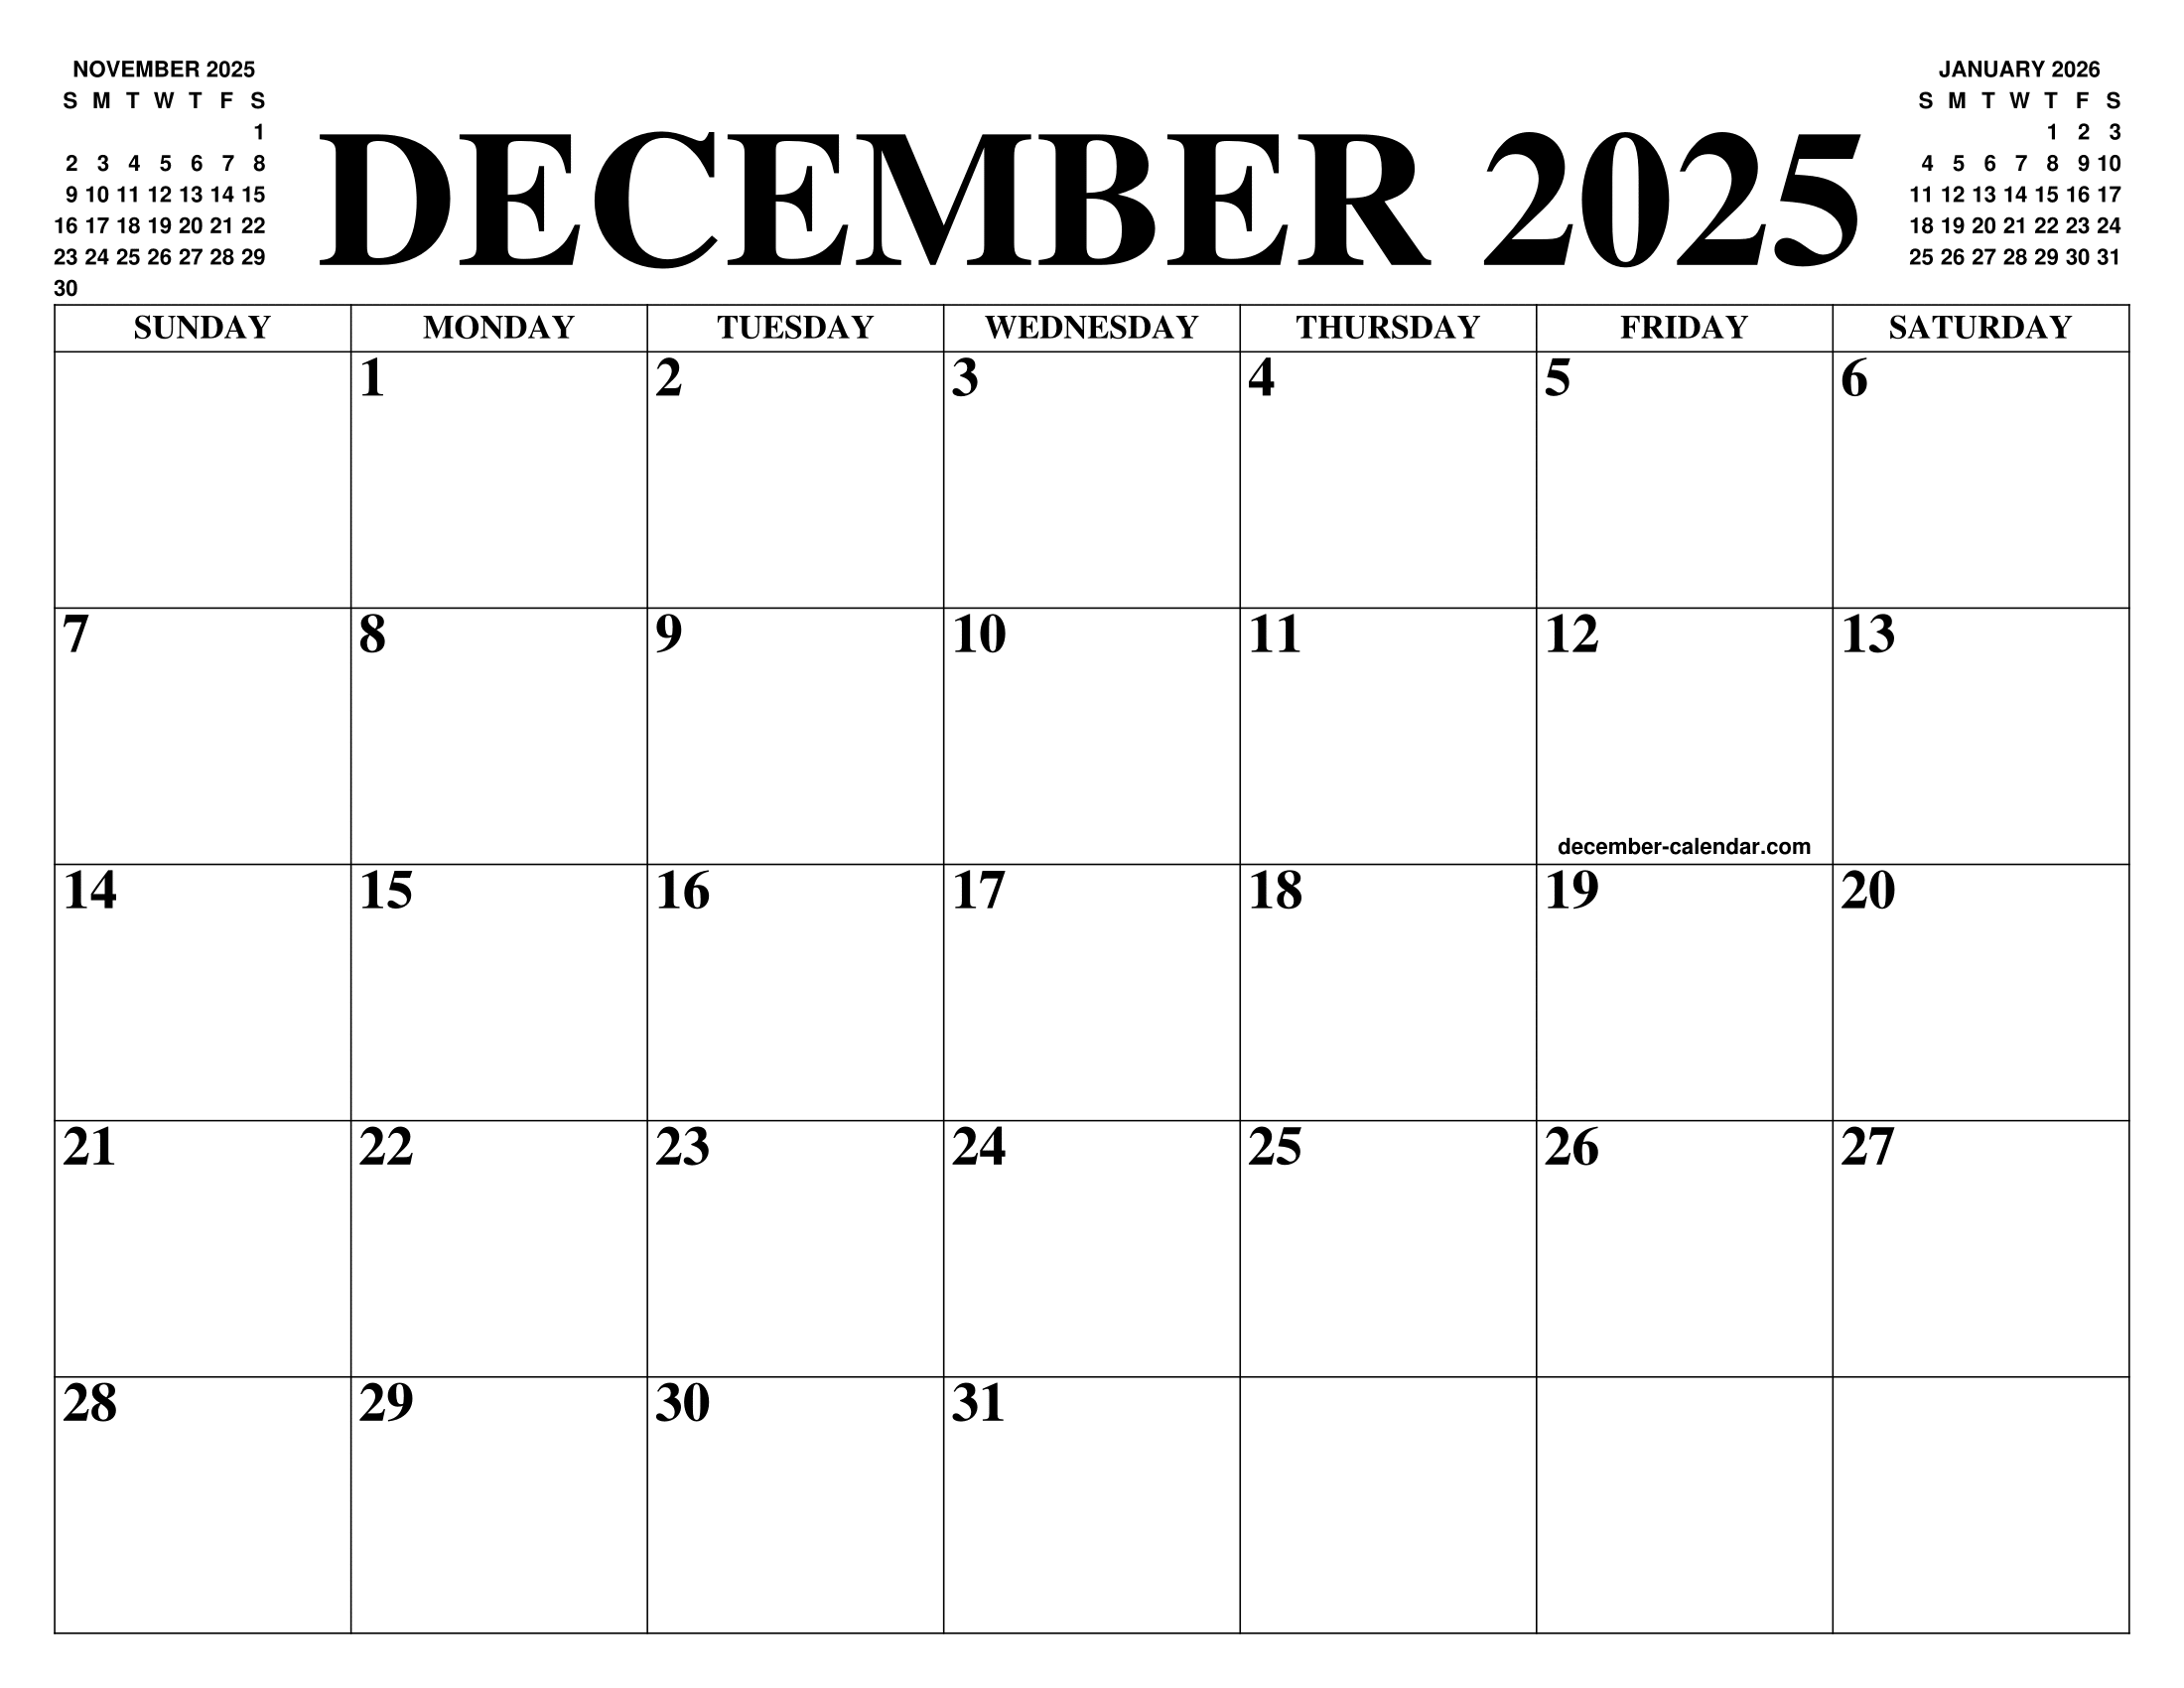 DECEMBER 2025 CALENDAR OF THE MONTH FREE PRINTABLE DECEMBER CALENDAR